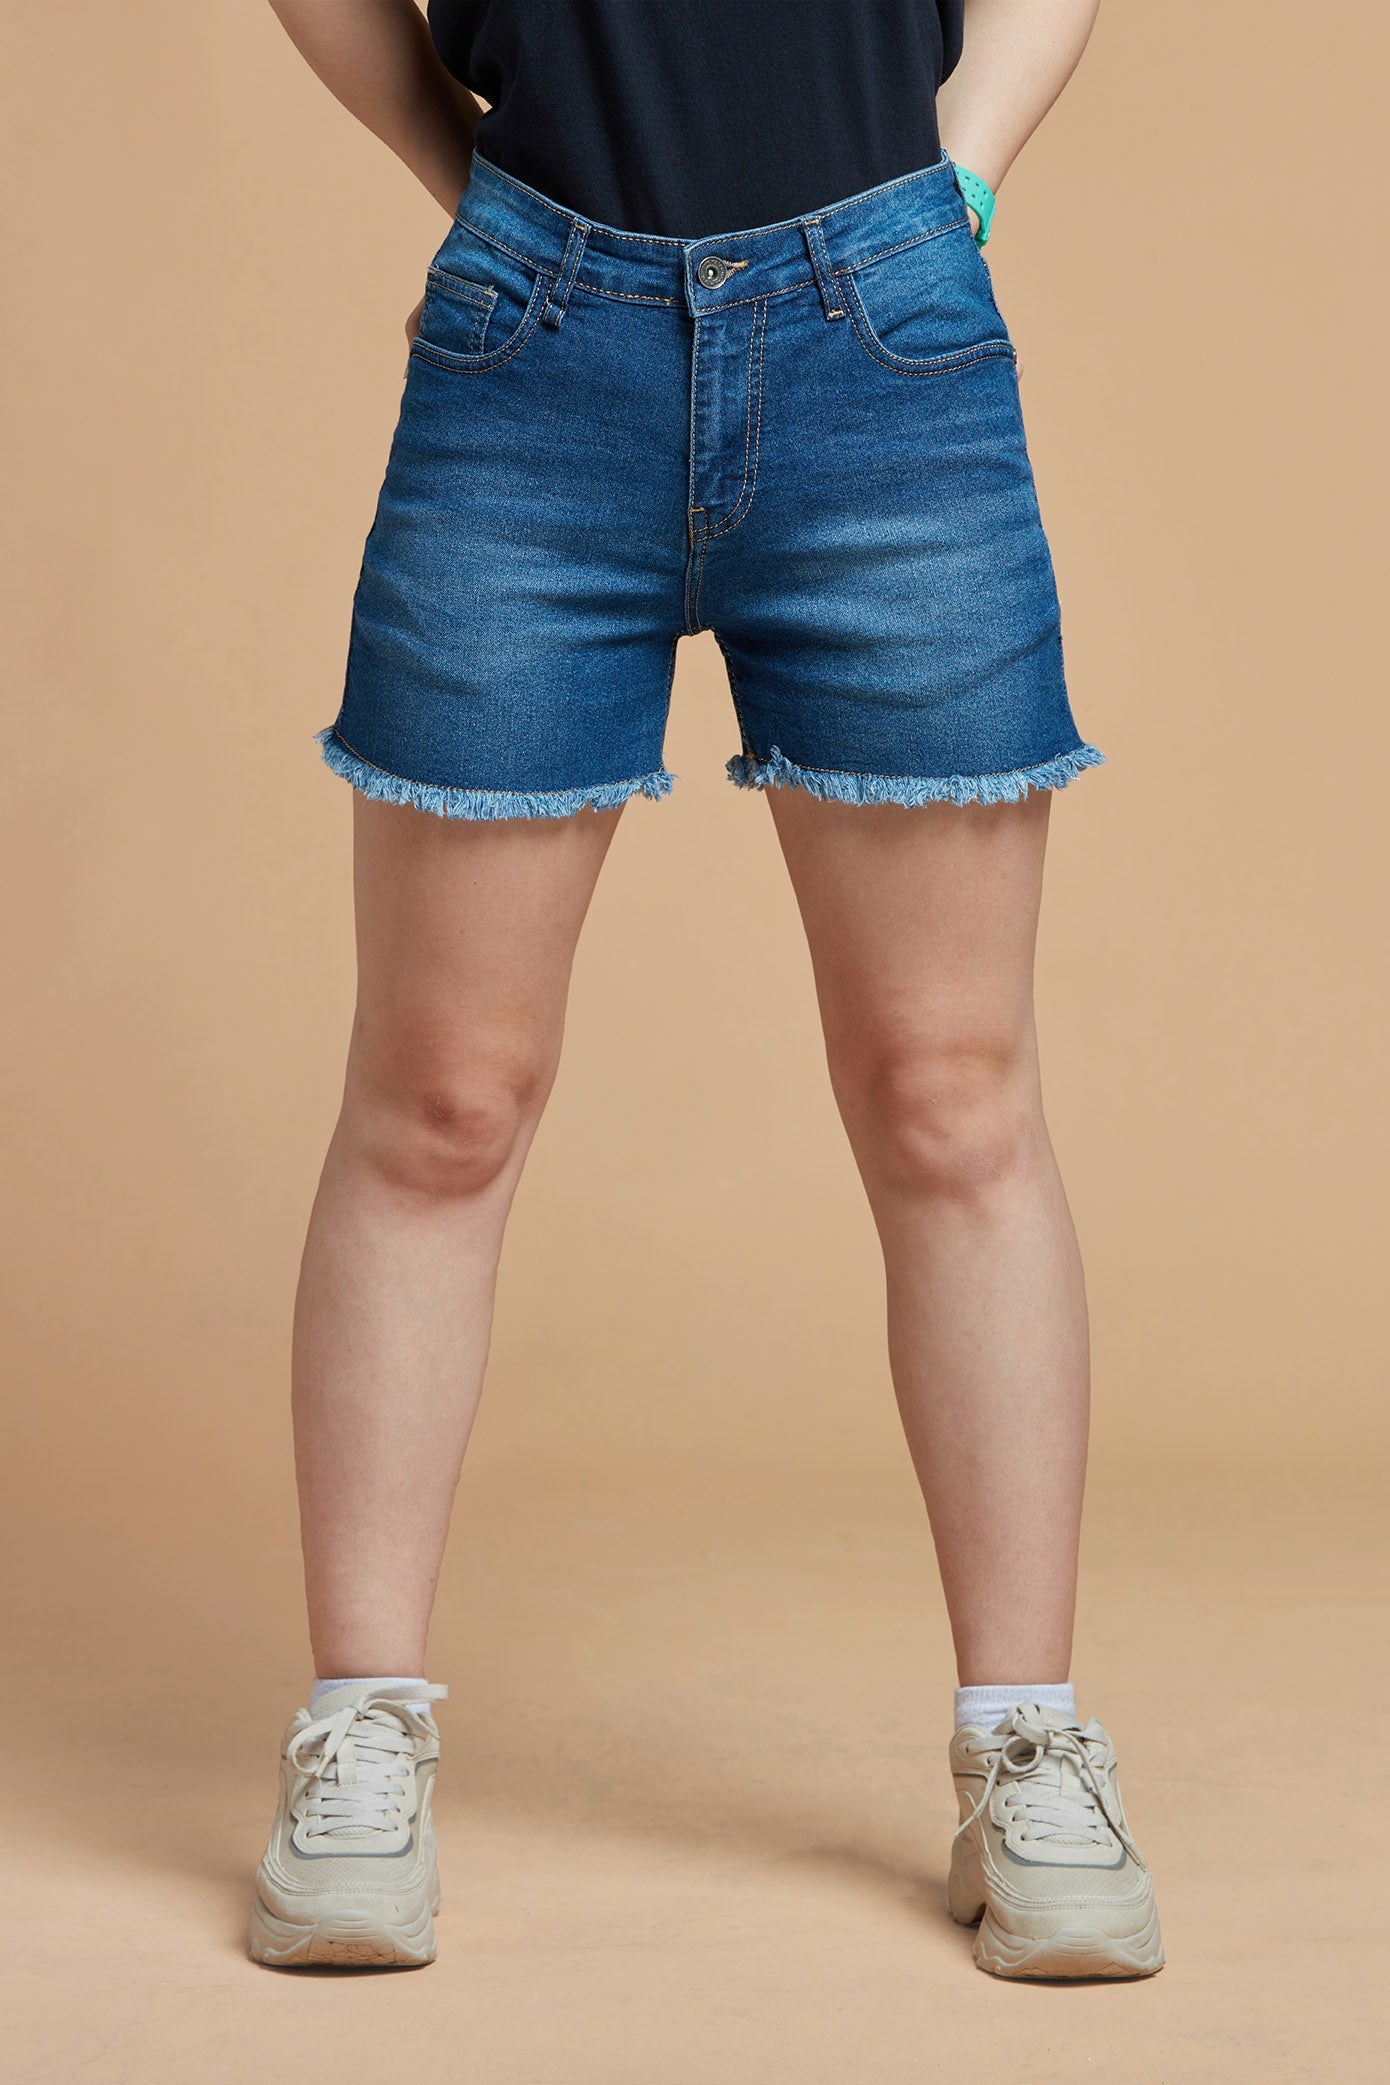 Ripped High Waisted Denim Shorts | High waisted shorts denim, Denim shorts  women, Short outfits